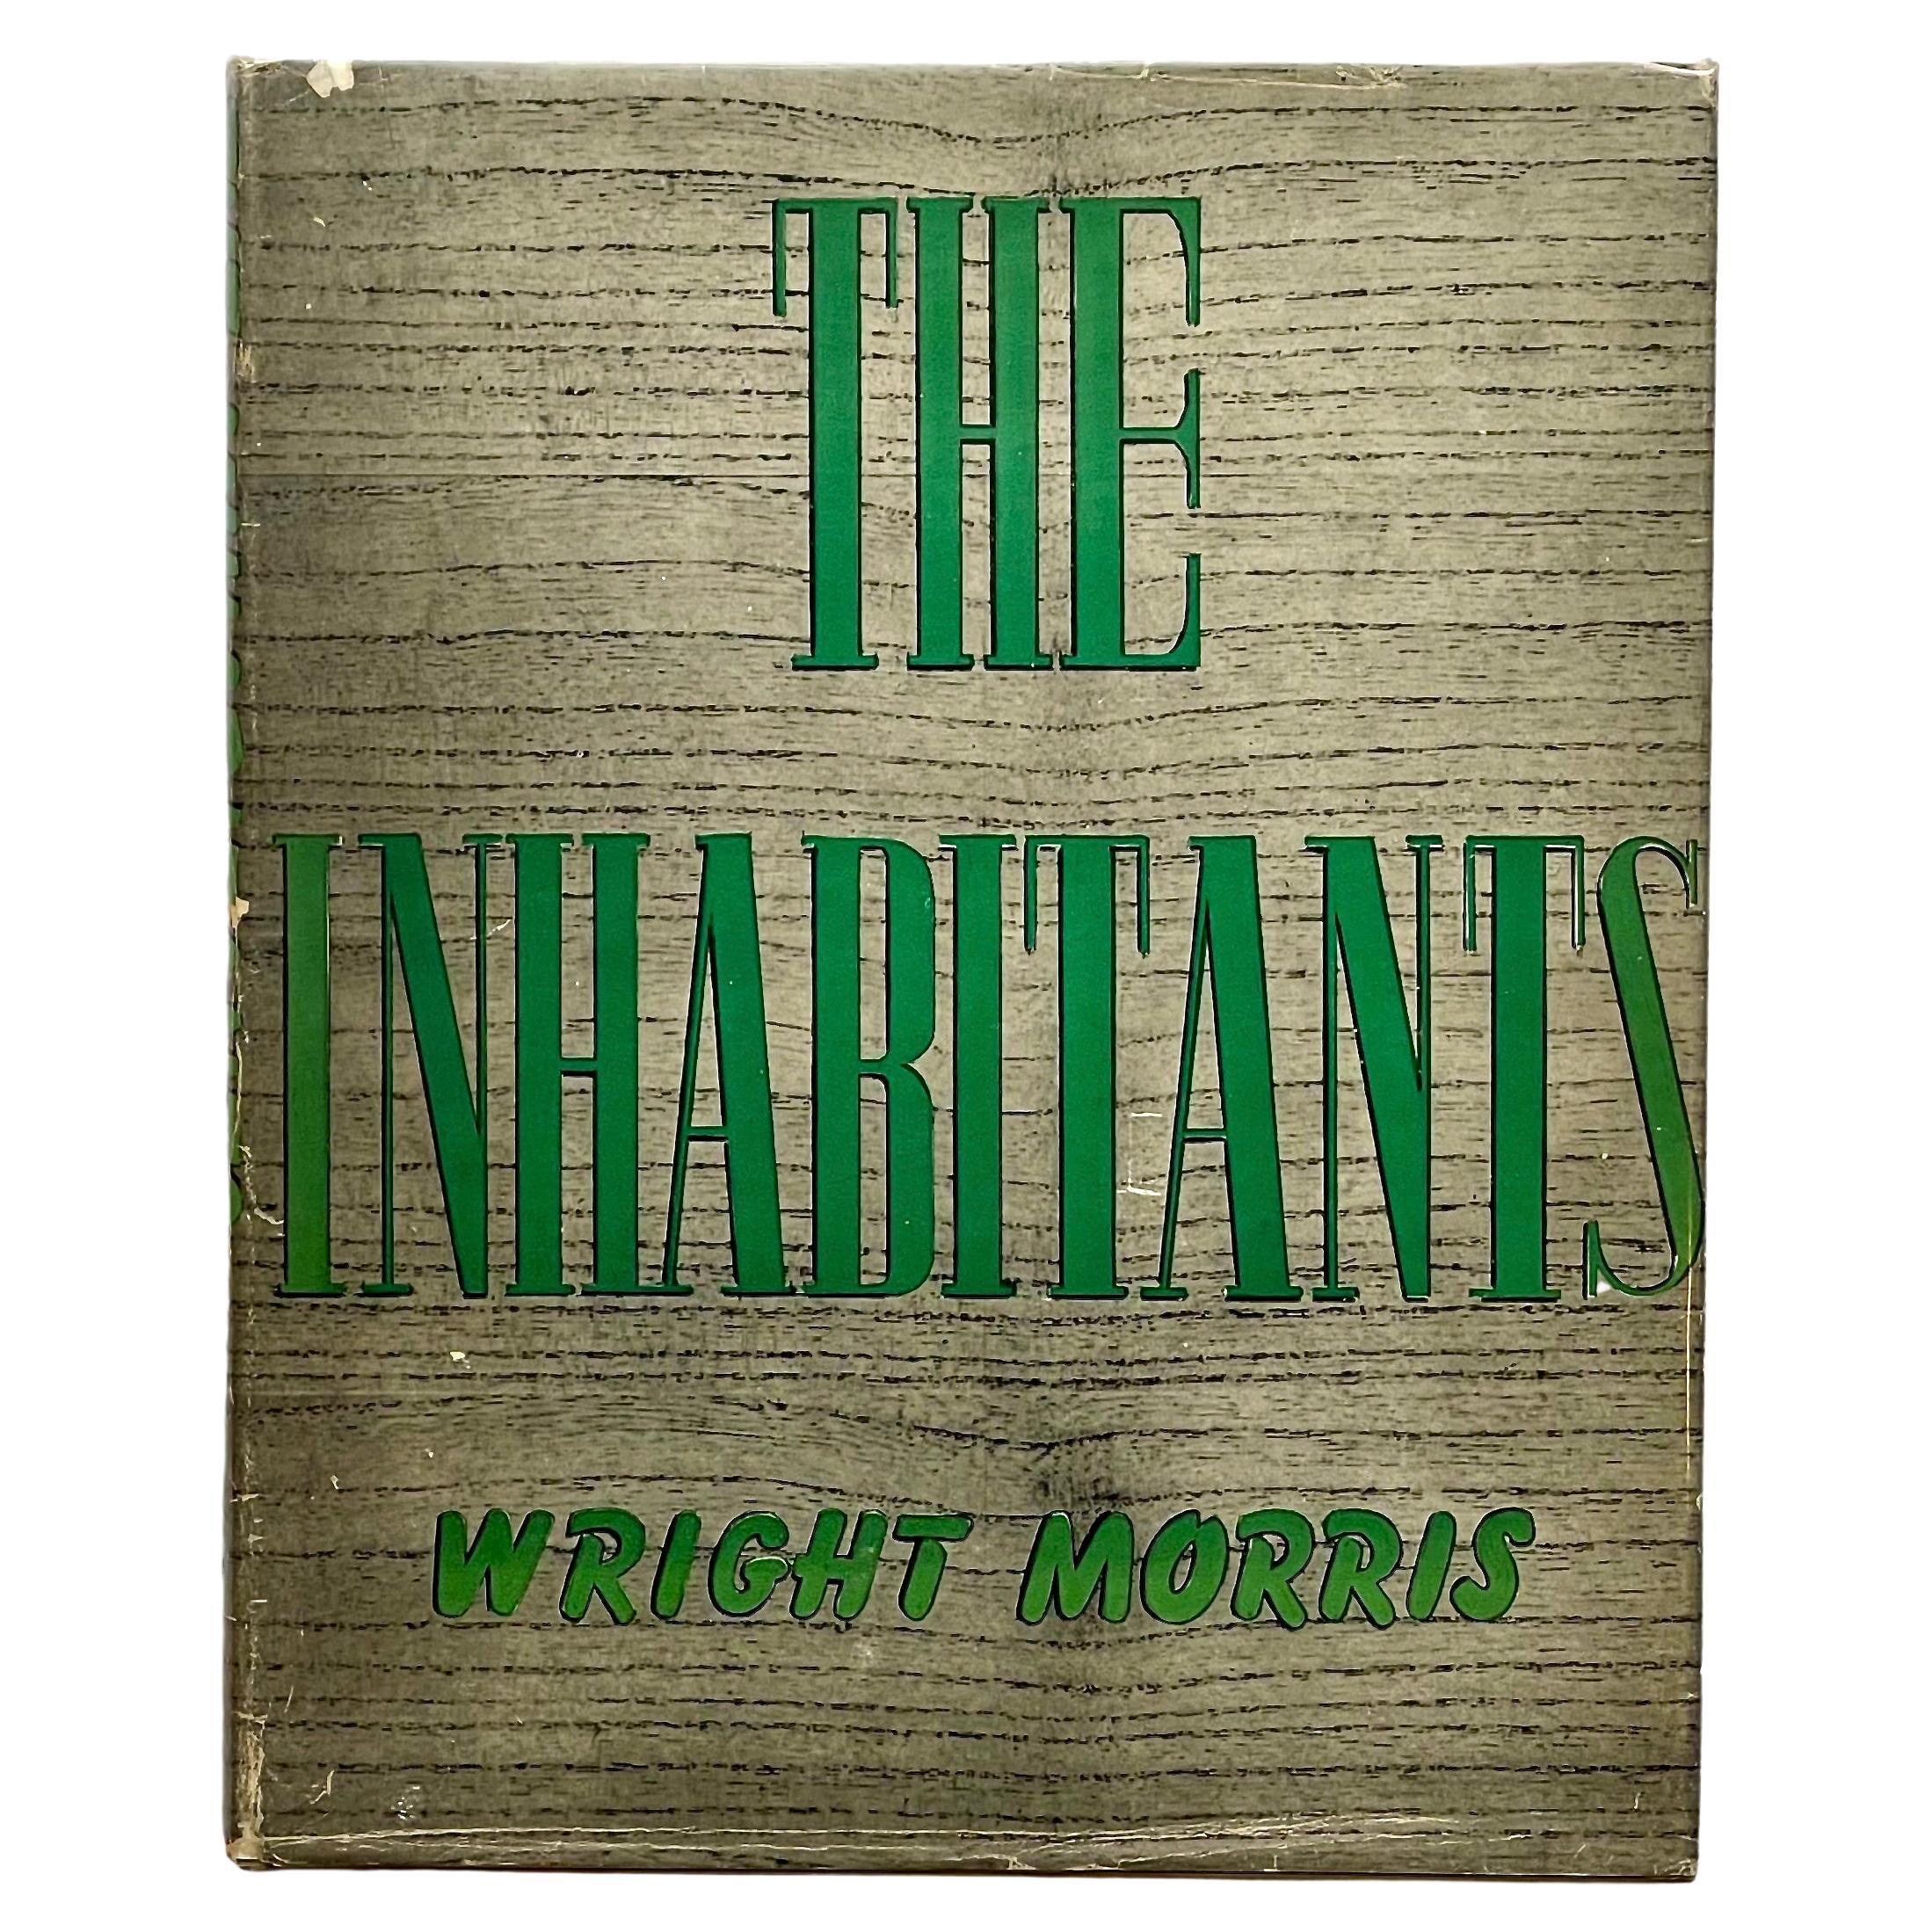 The Inhabitants, Wright Morris, 1st Edition, Scribner's, 1946